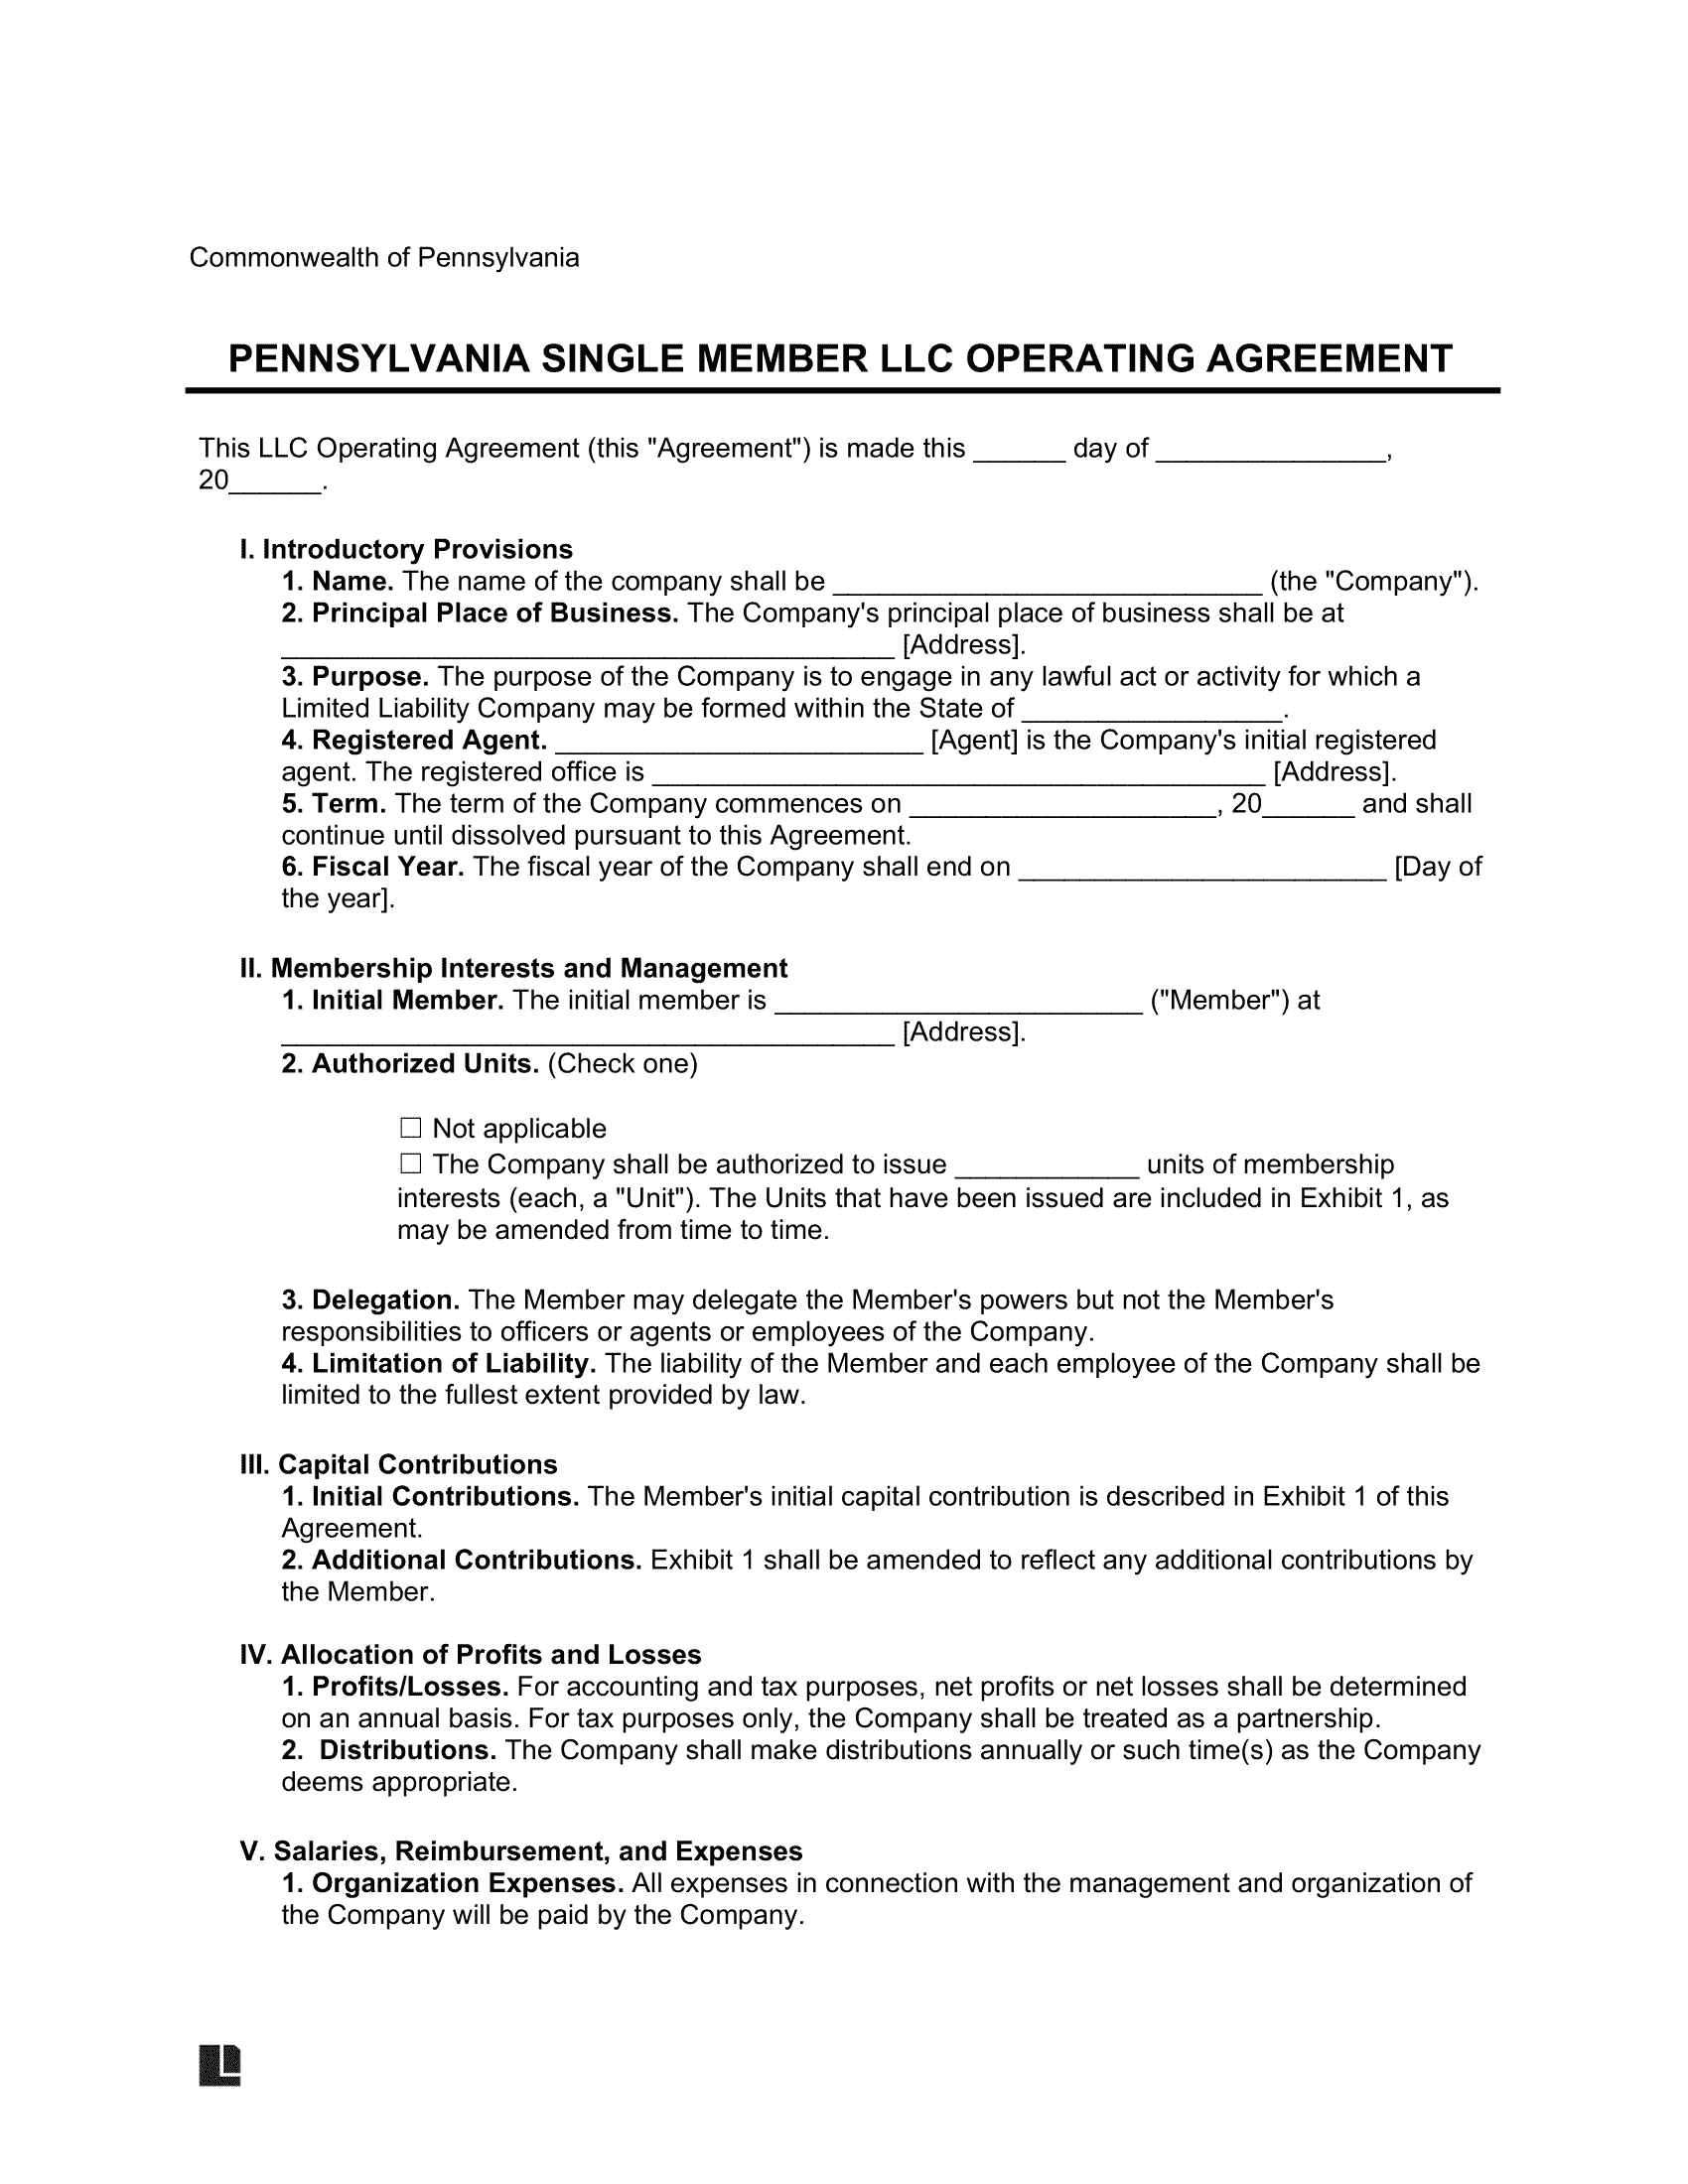 Pennsylvania Single Member LLC Operating Agreement Form